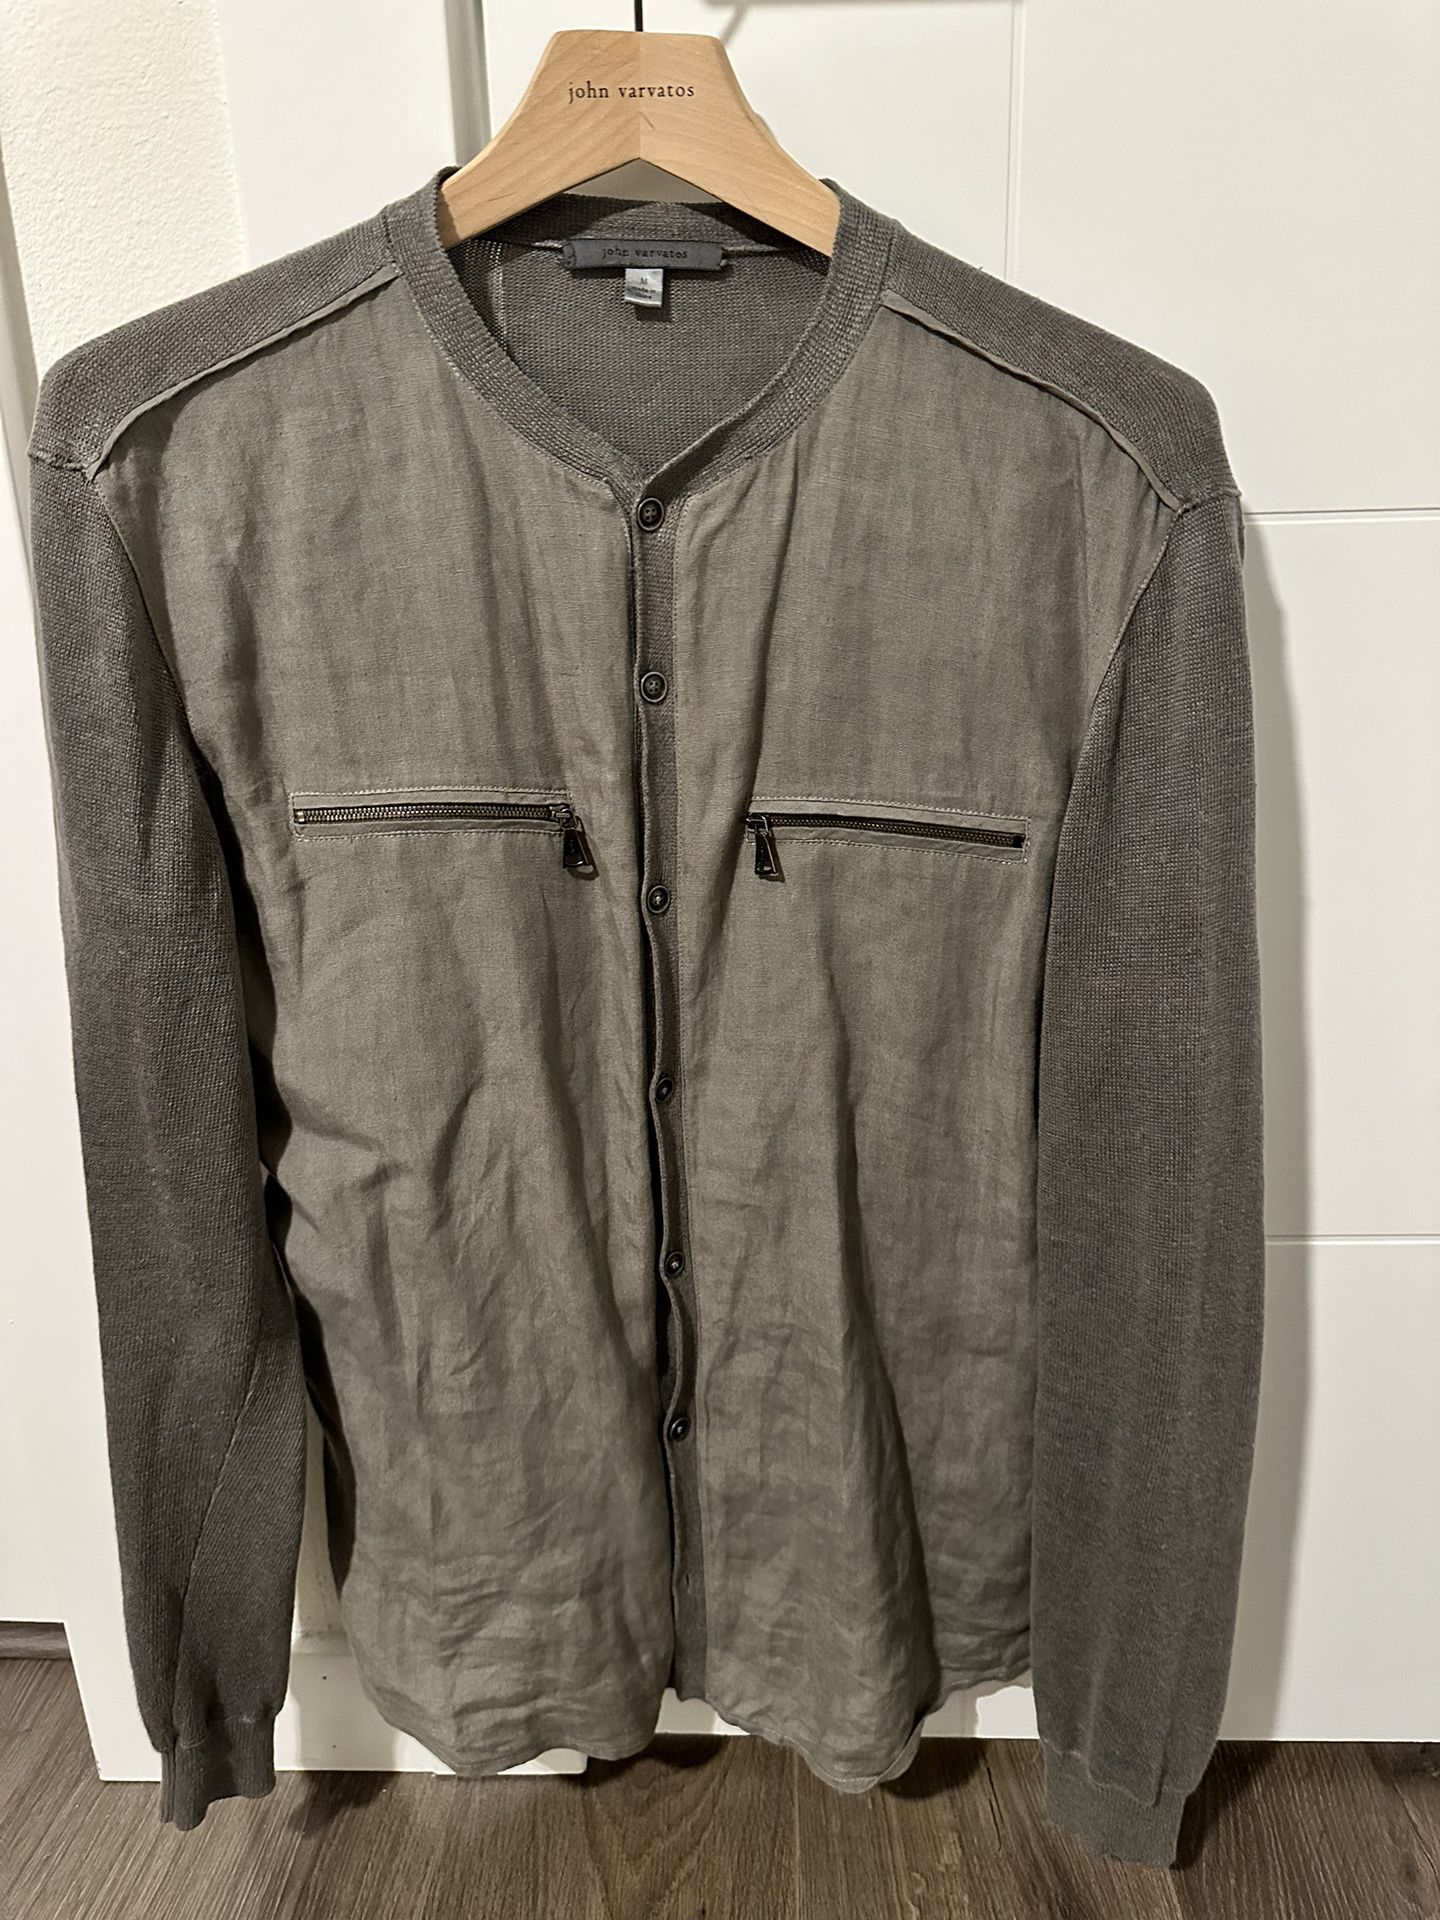 John Varvatos Grey Collection Shirt Jacket “Shacket” Size Small